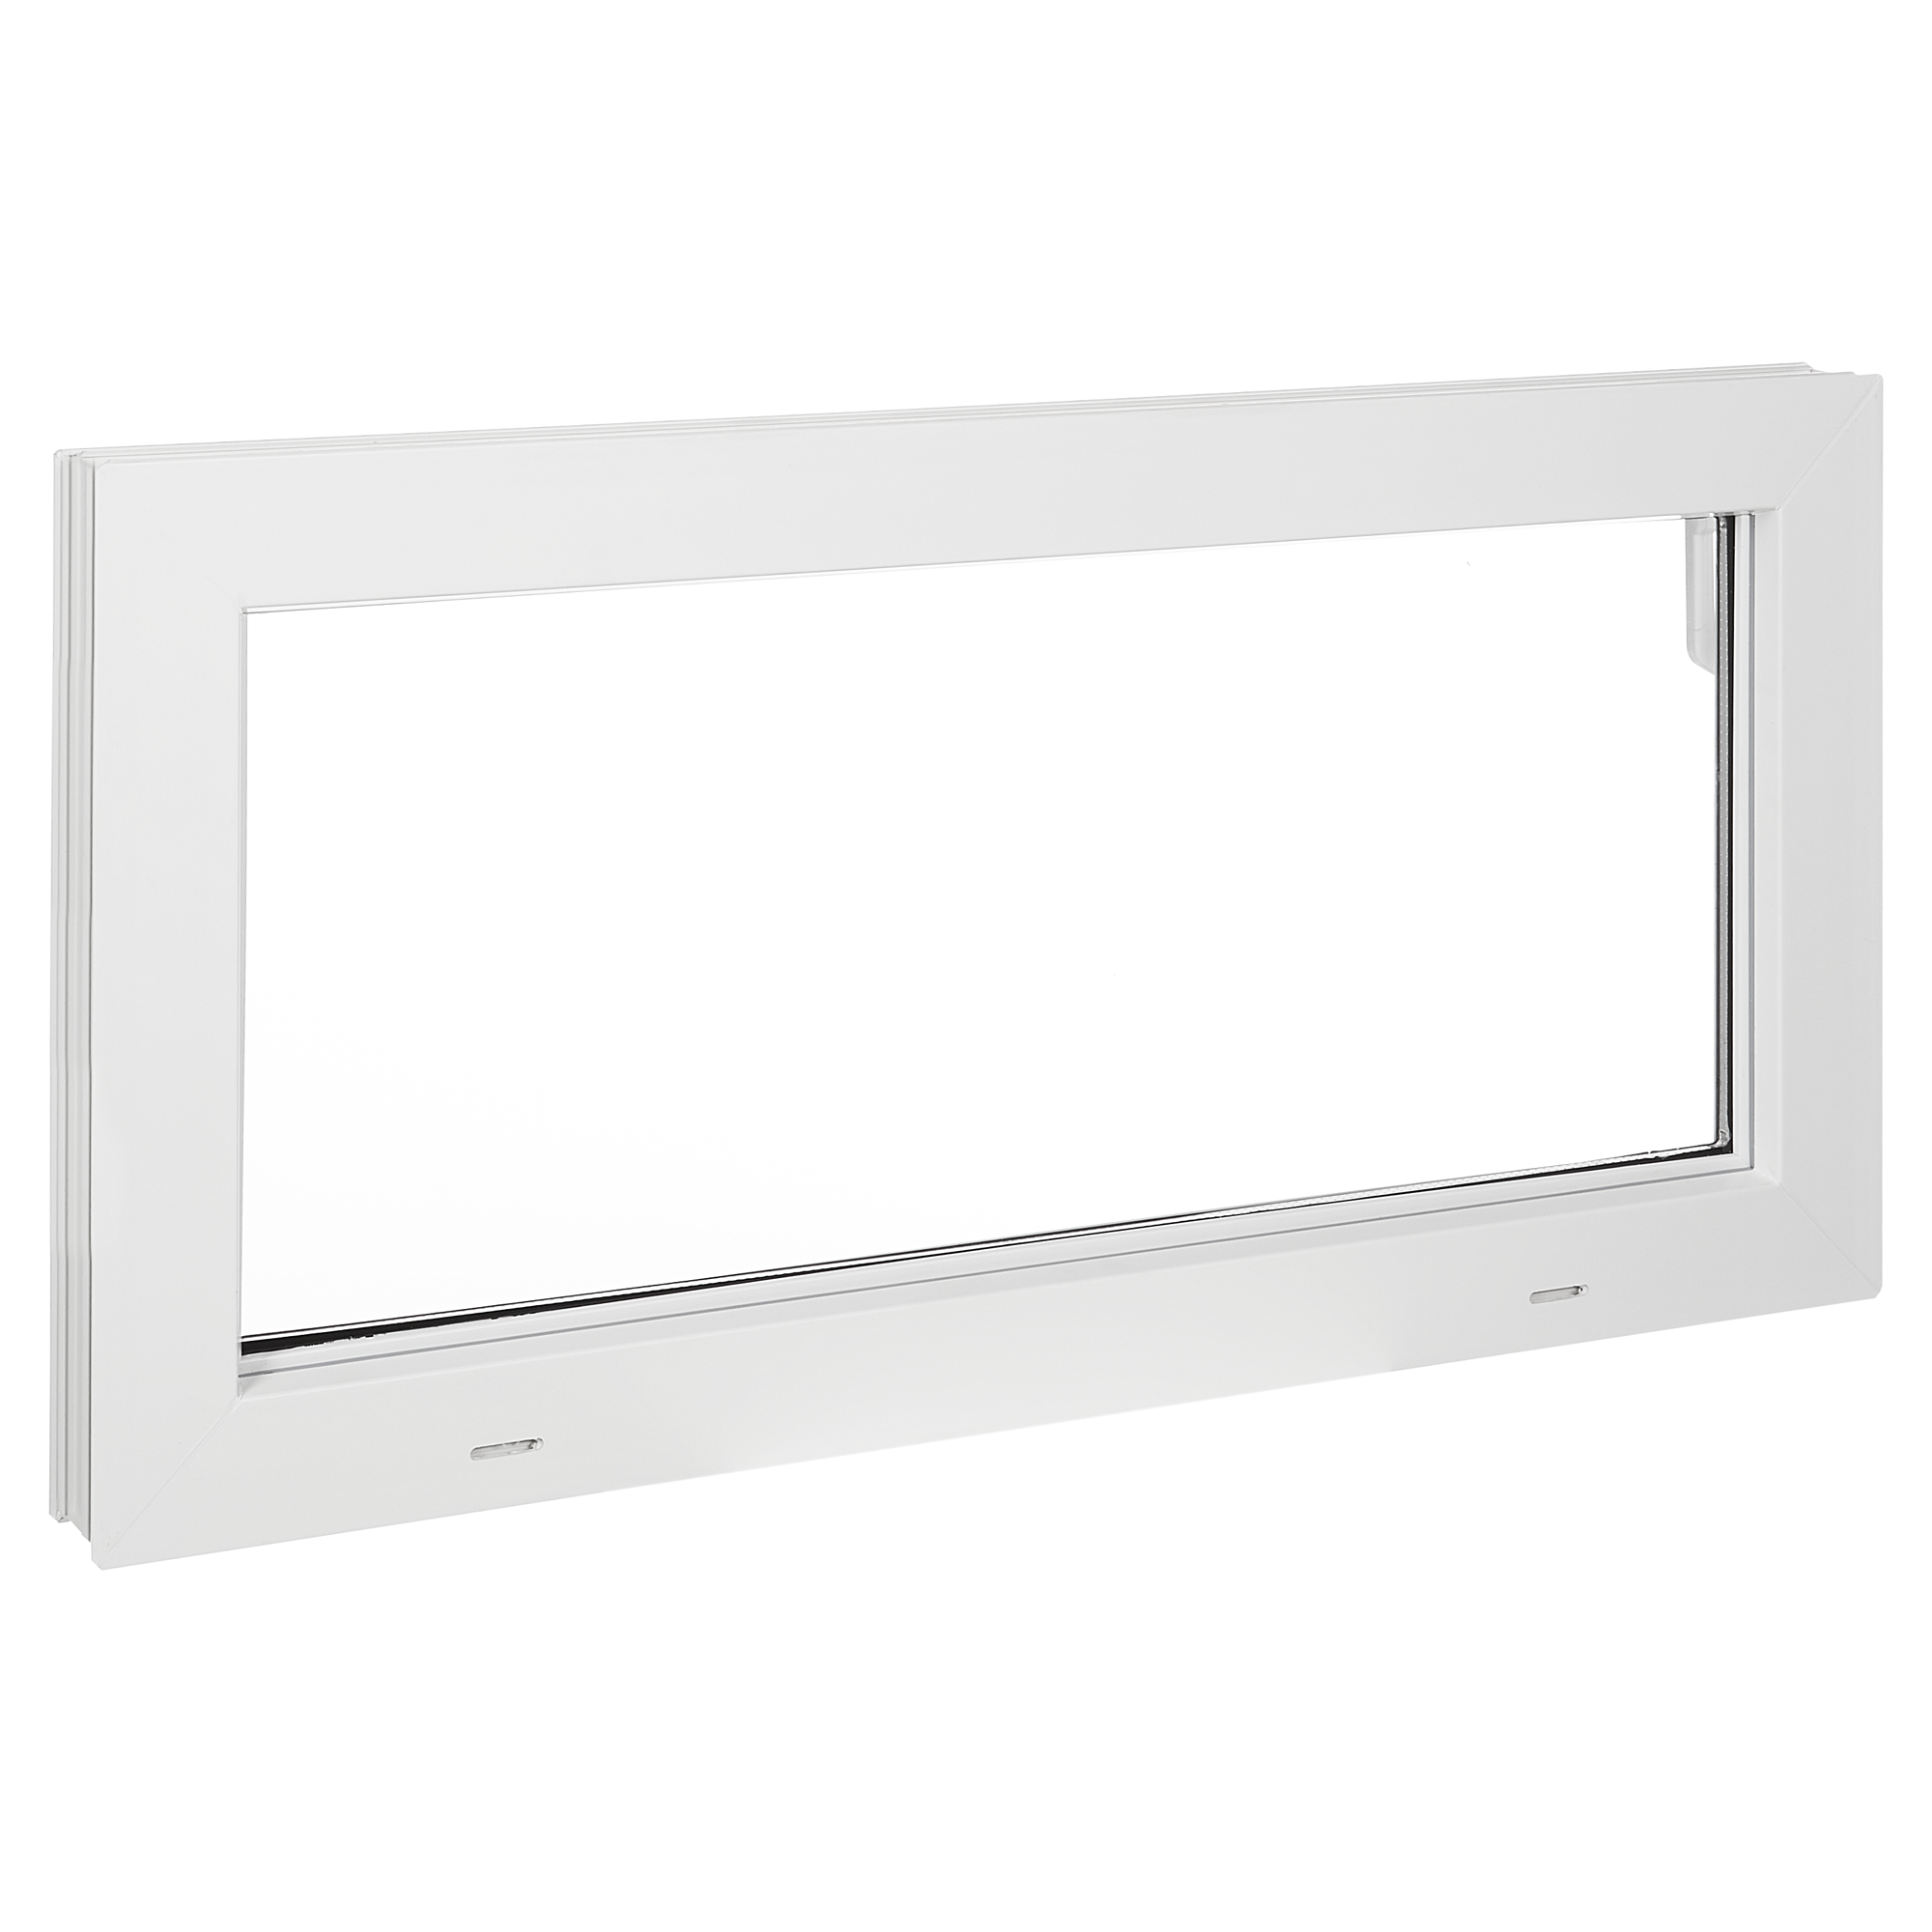 Kippfenster weiß 1-flügelig 100 x 50 cm + product picture